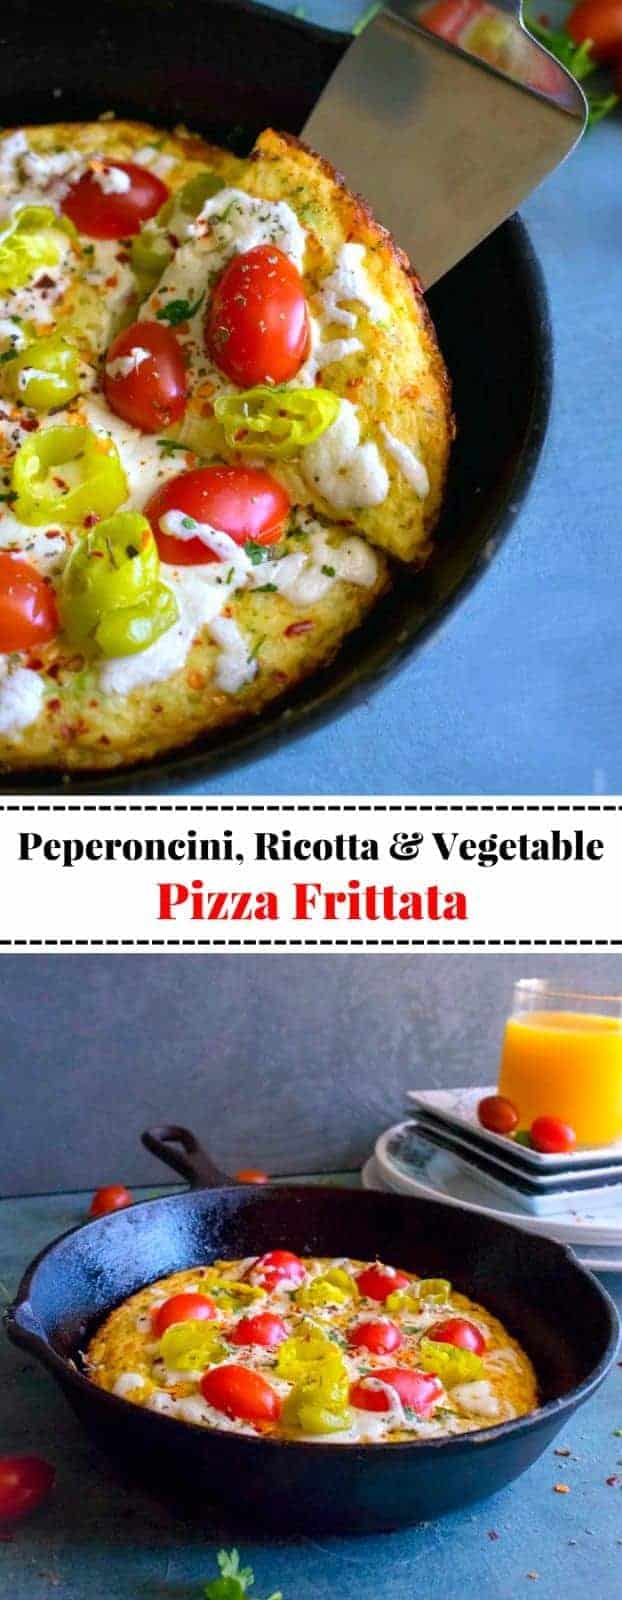 Peperoncini, Ricotta and Vegetable Pizza Frittata: #frittata #pizza #ricotta @mezzetta #ad #Mezzetta